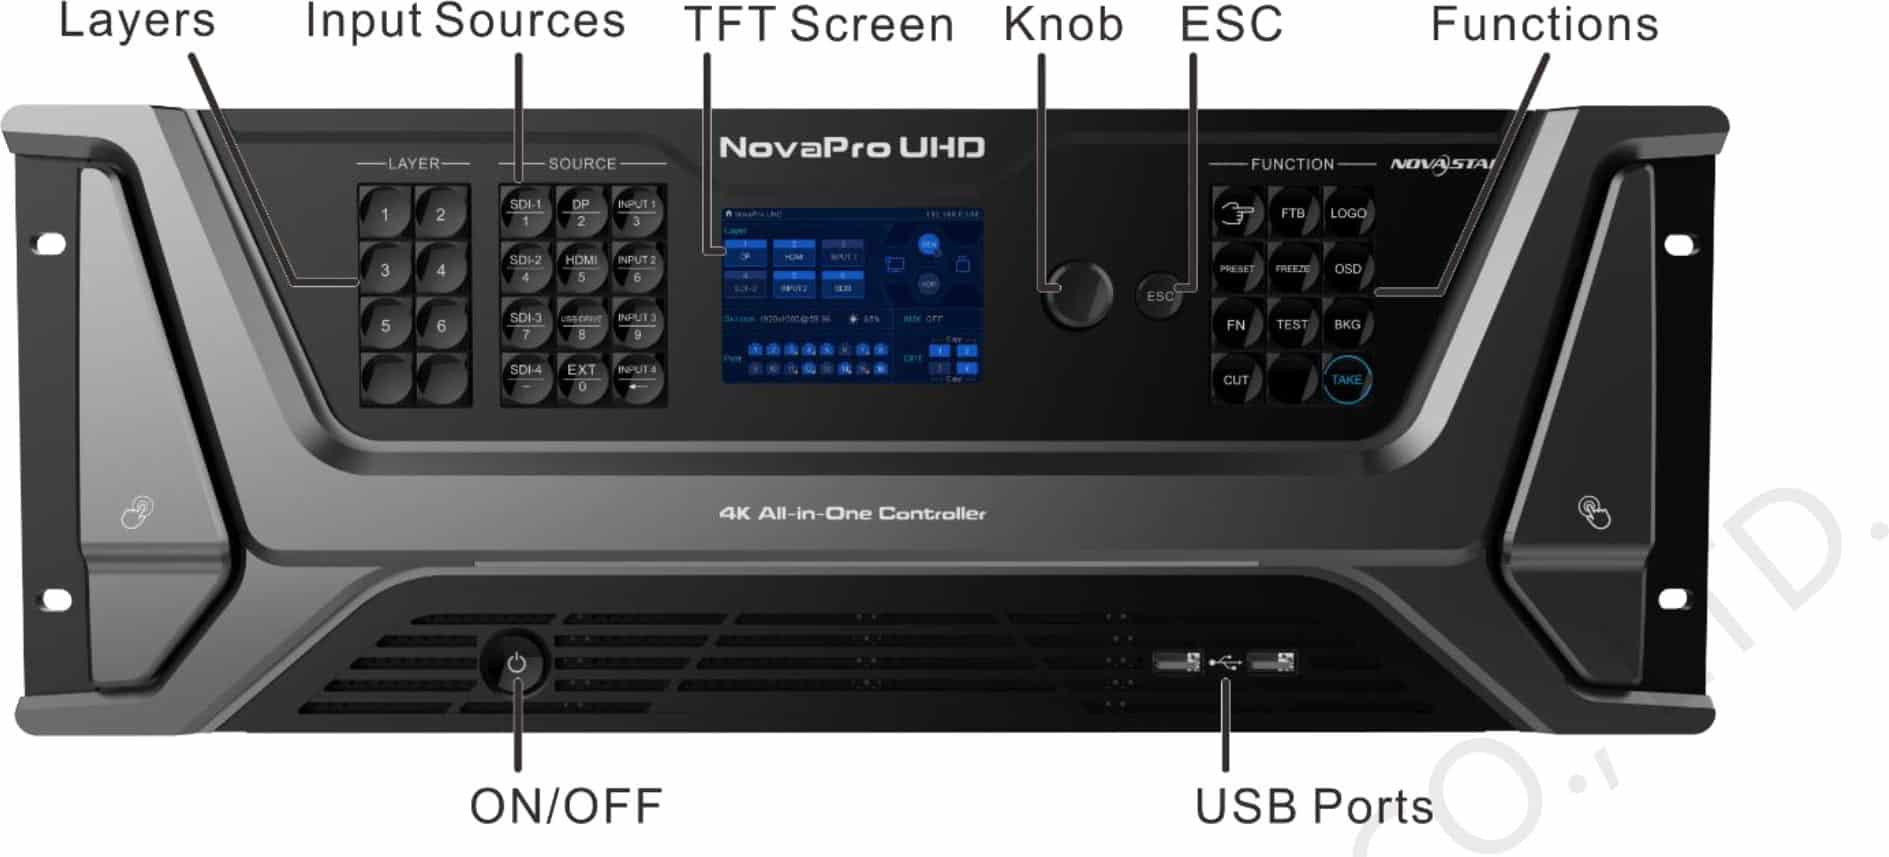 NovaPro-HD-front-panel